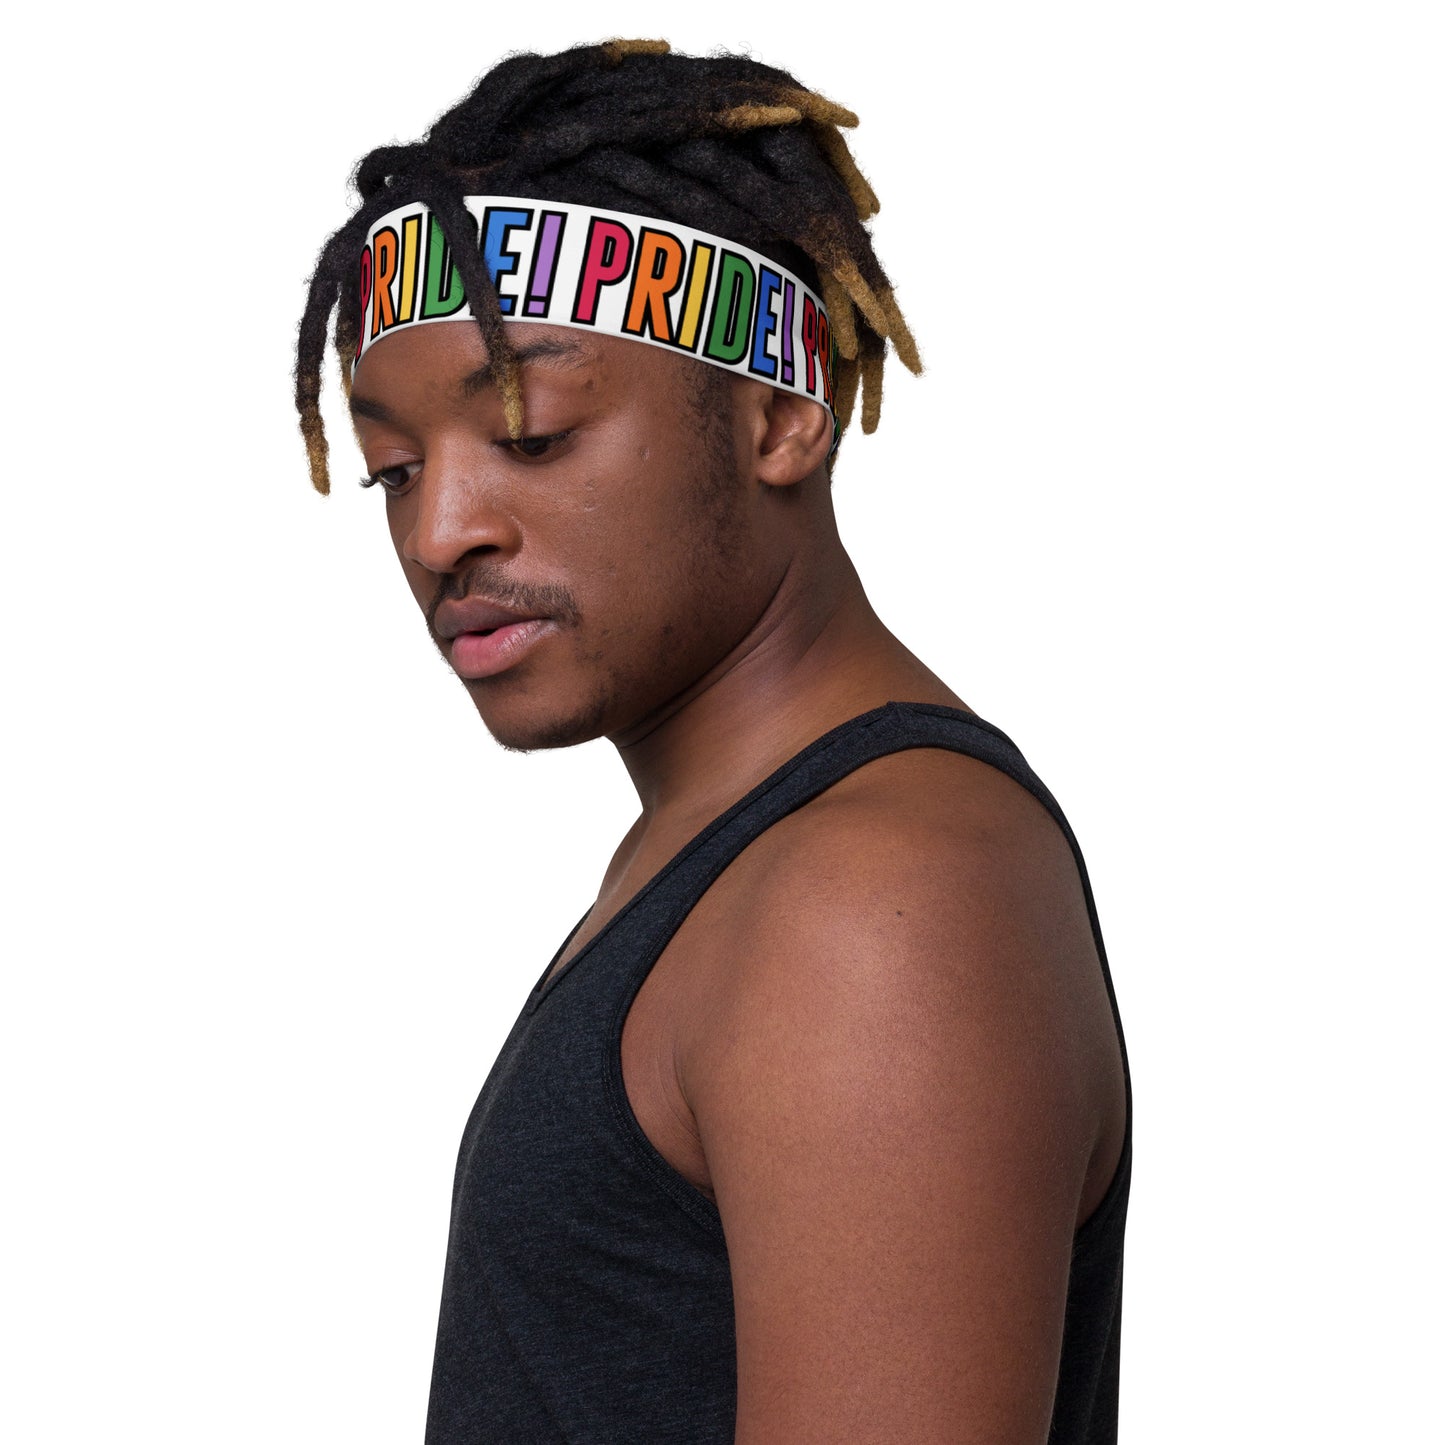 LGBT Gay Pride Rainbow Headband